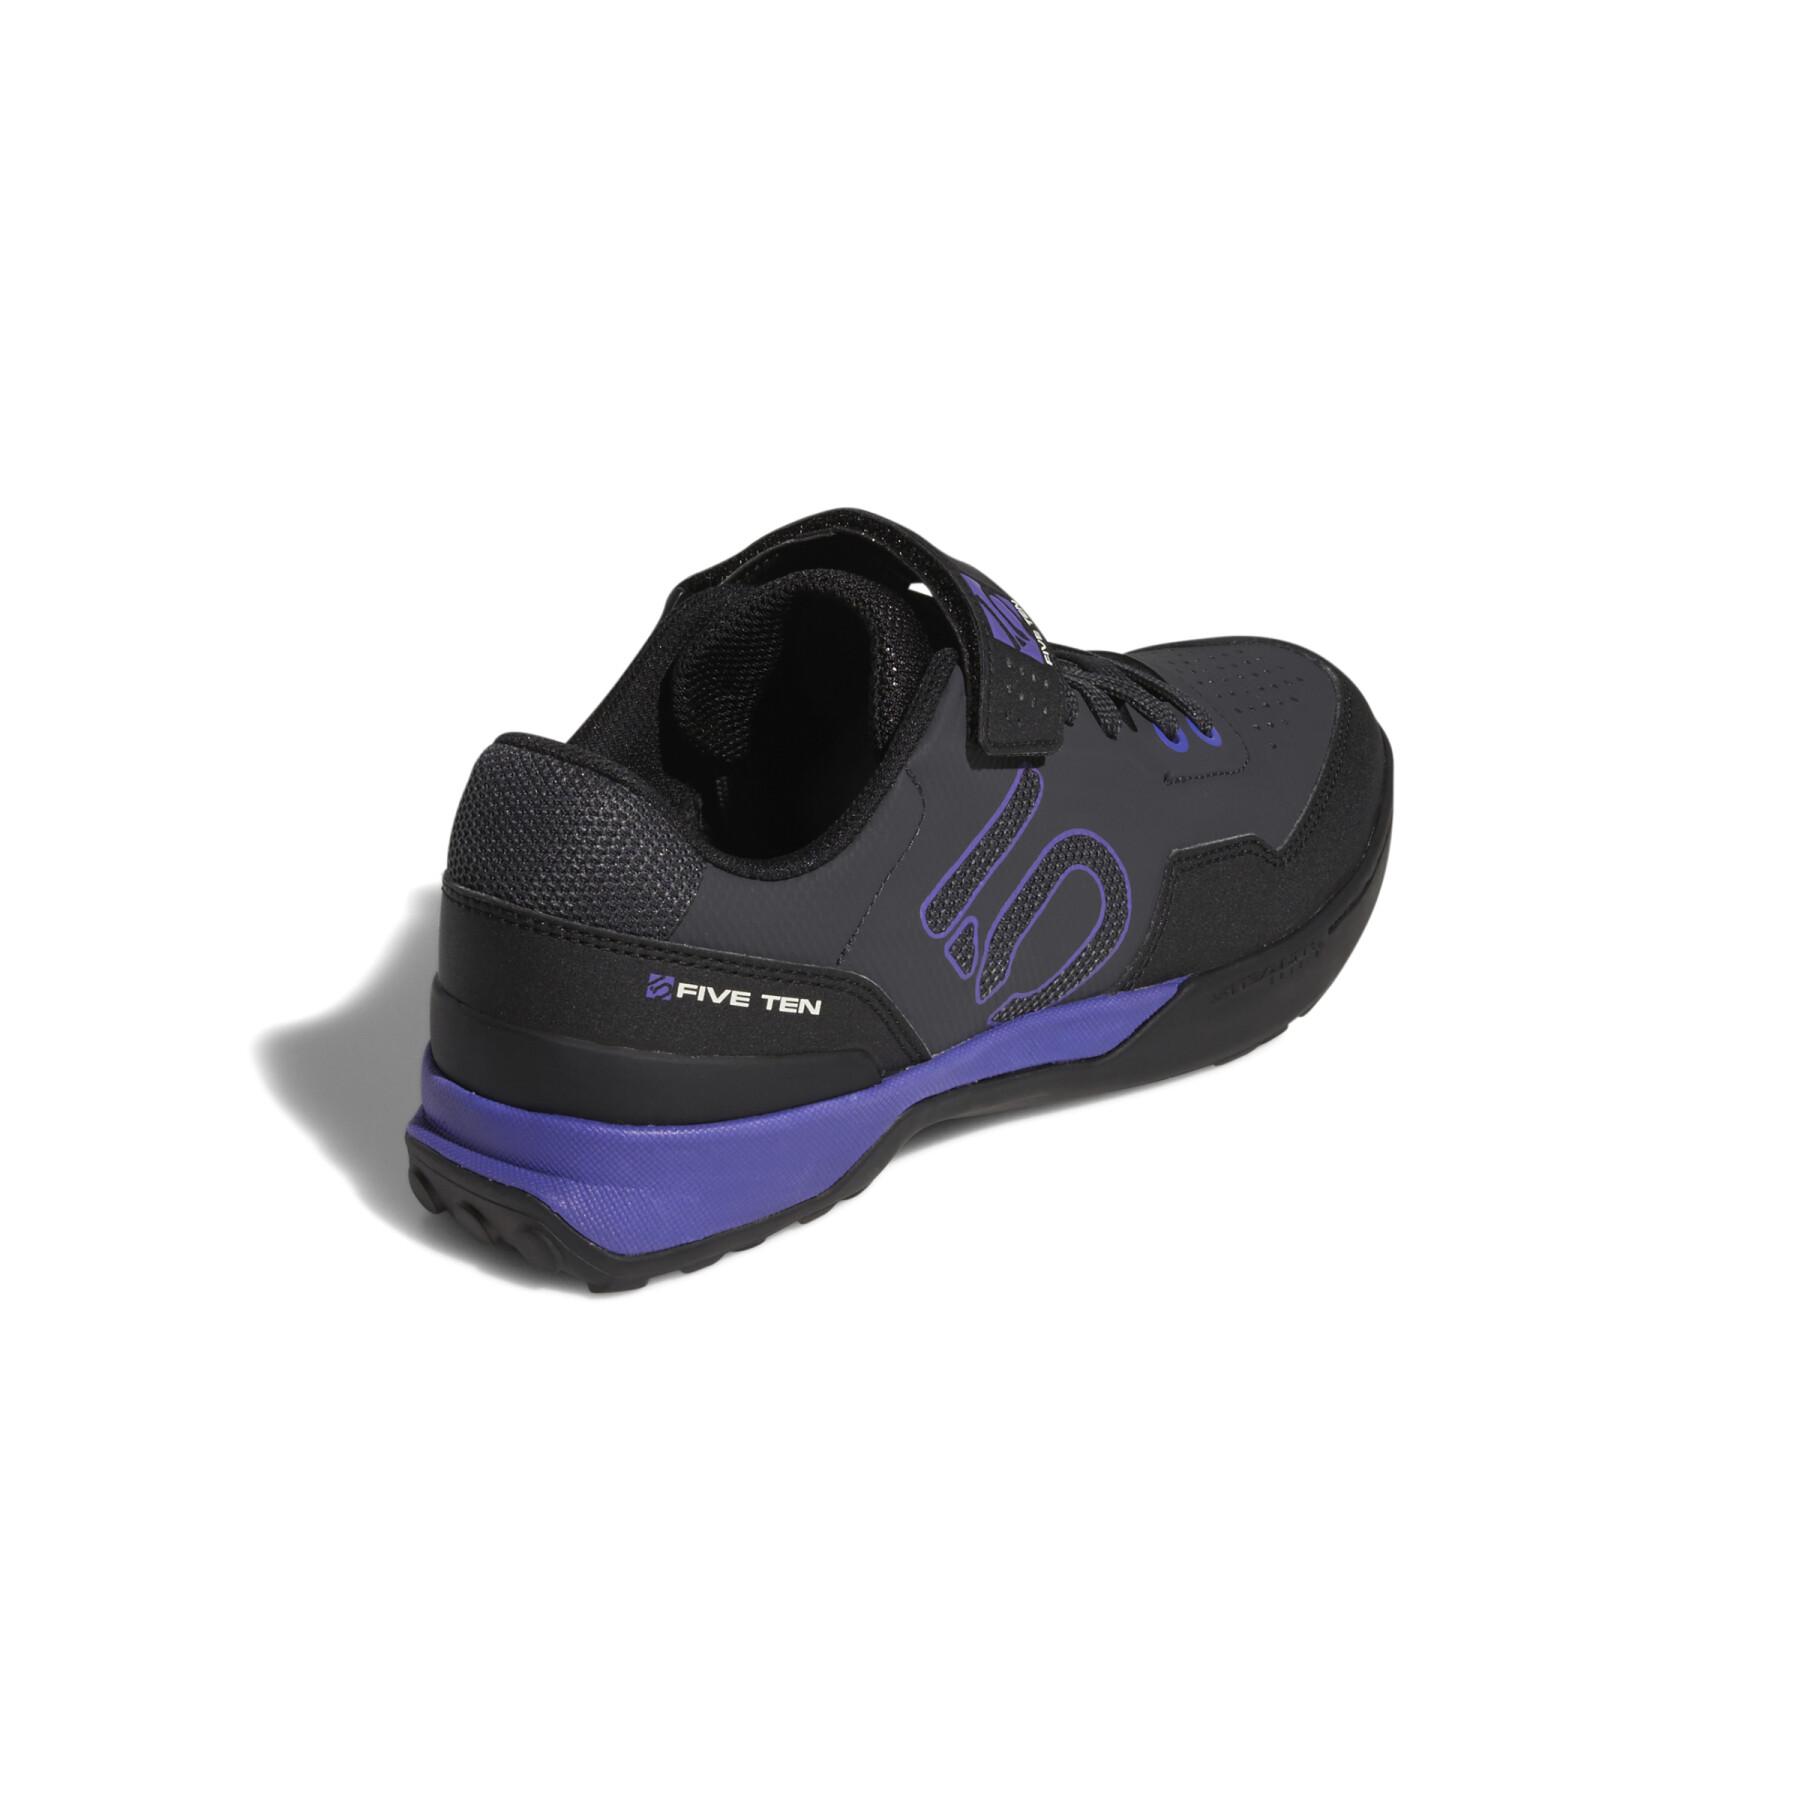 Women's mountain bike shoes adidas Five Ten Kestrel Lace